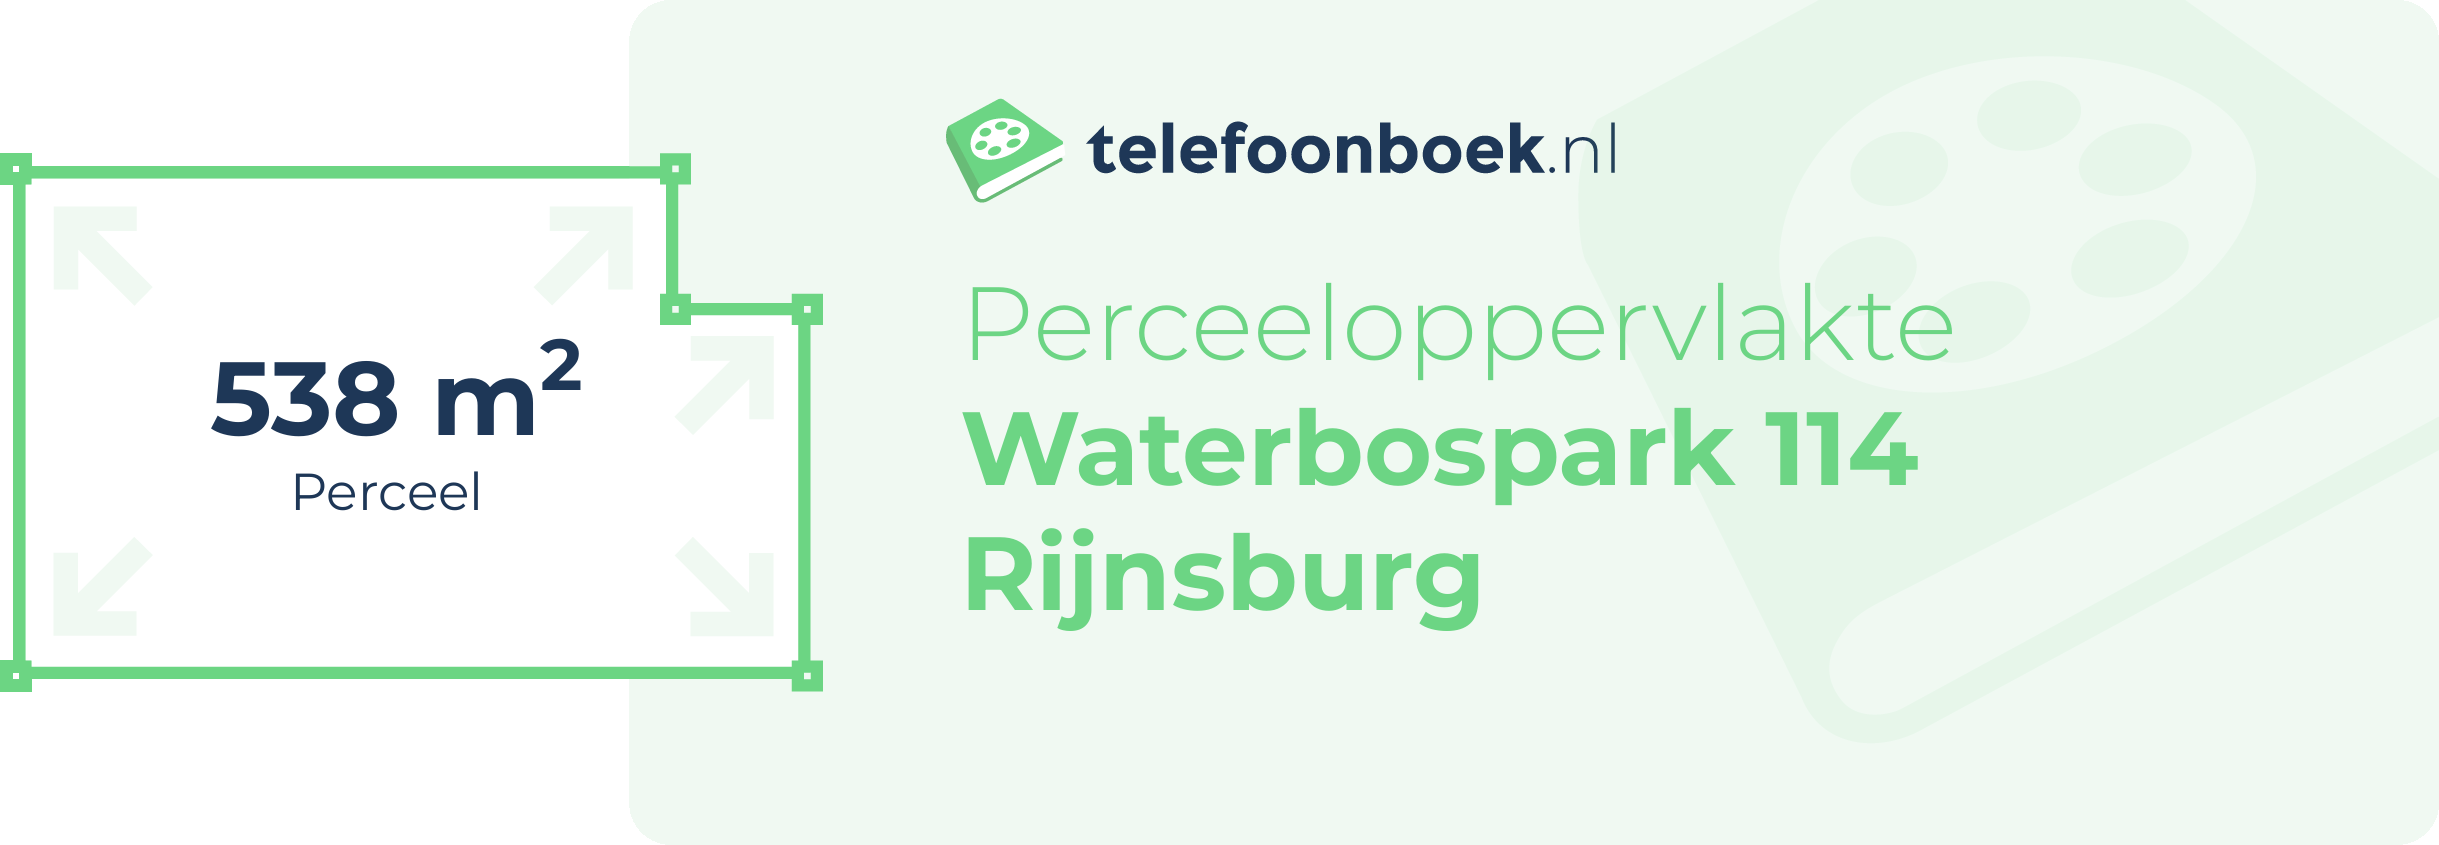 Perceeloppervlakte Waterbospark 114 Rijnsburg